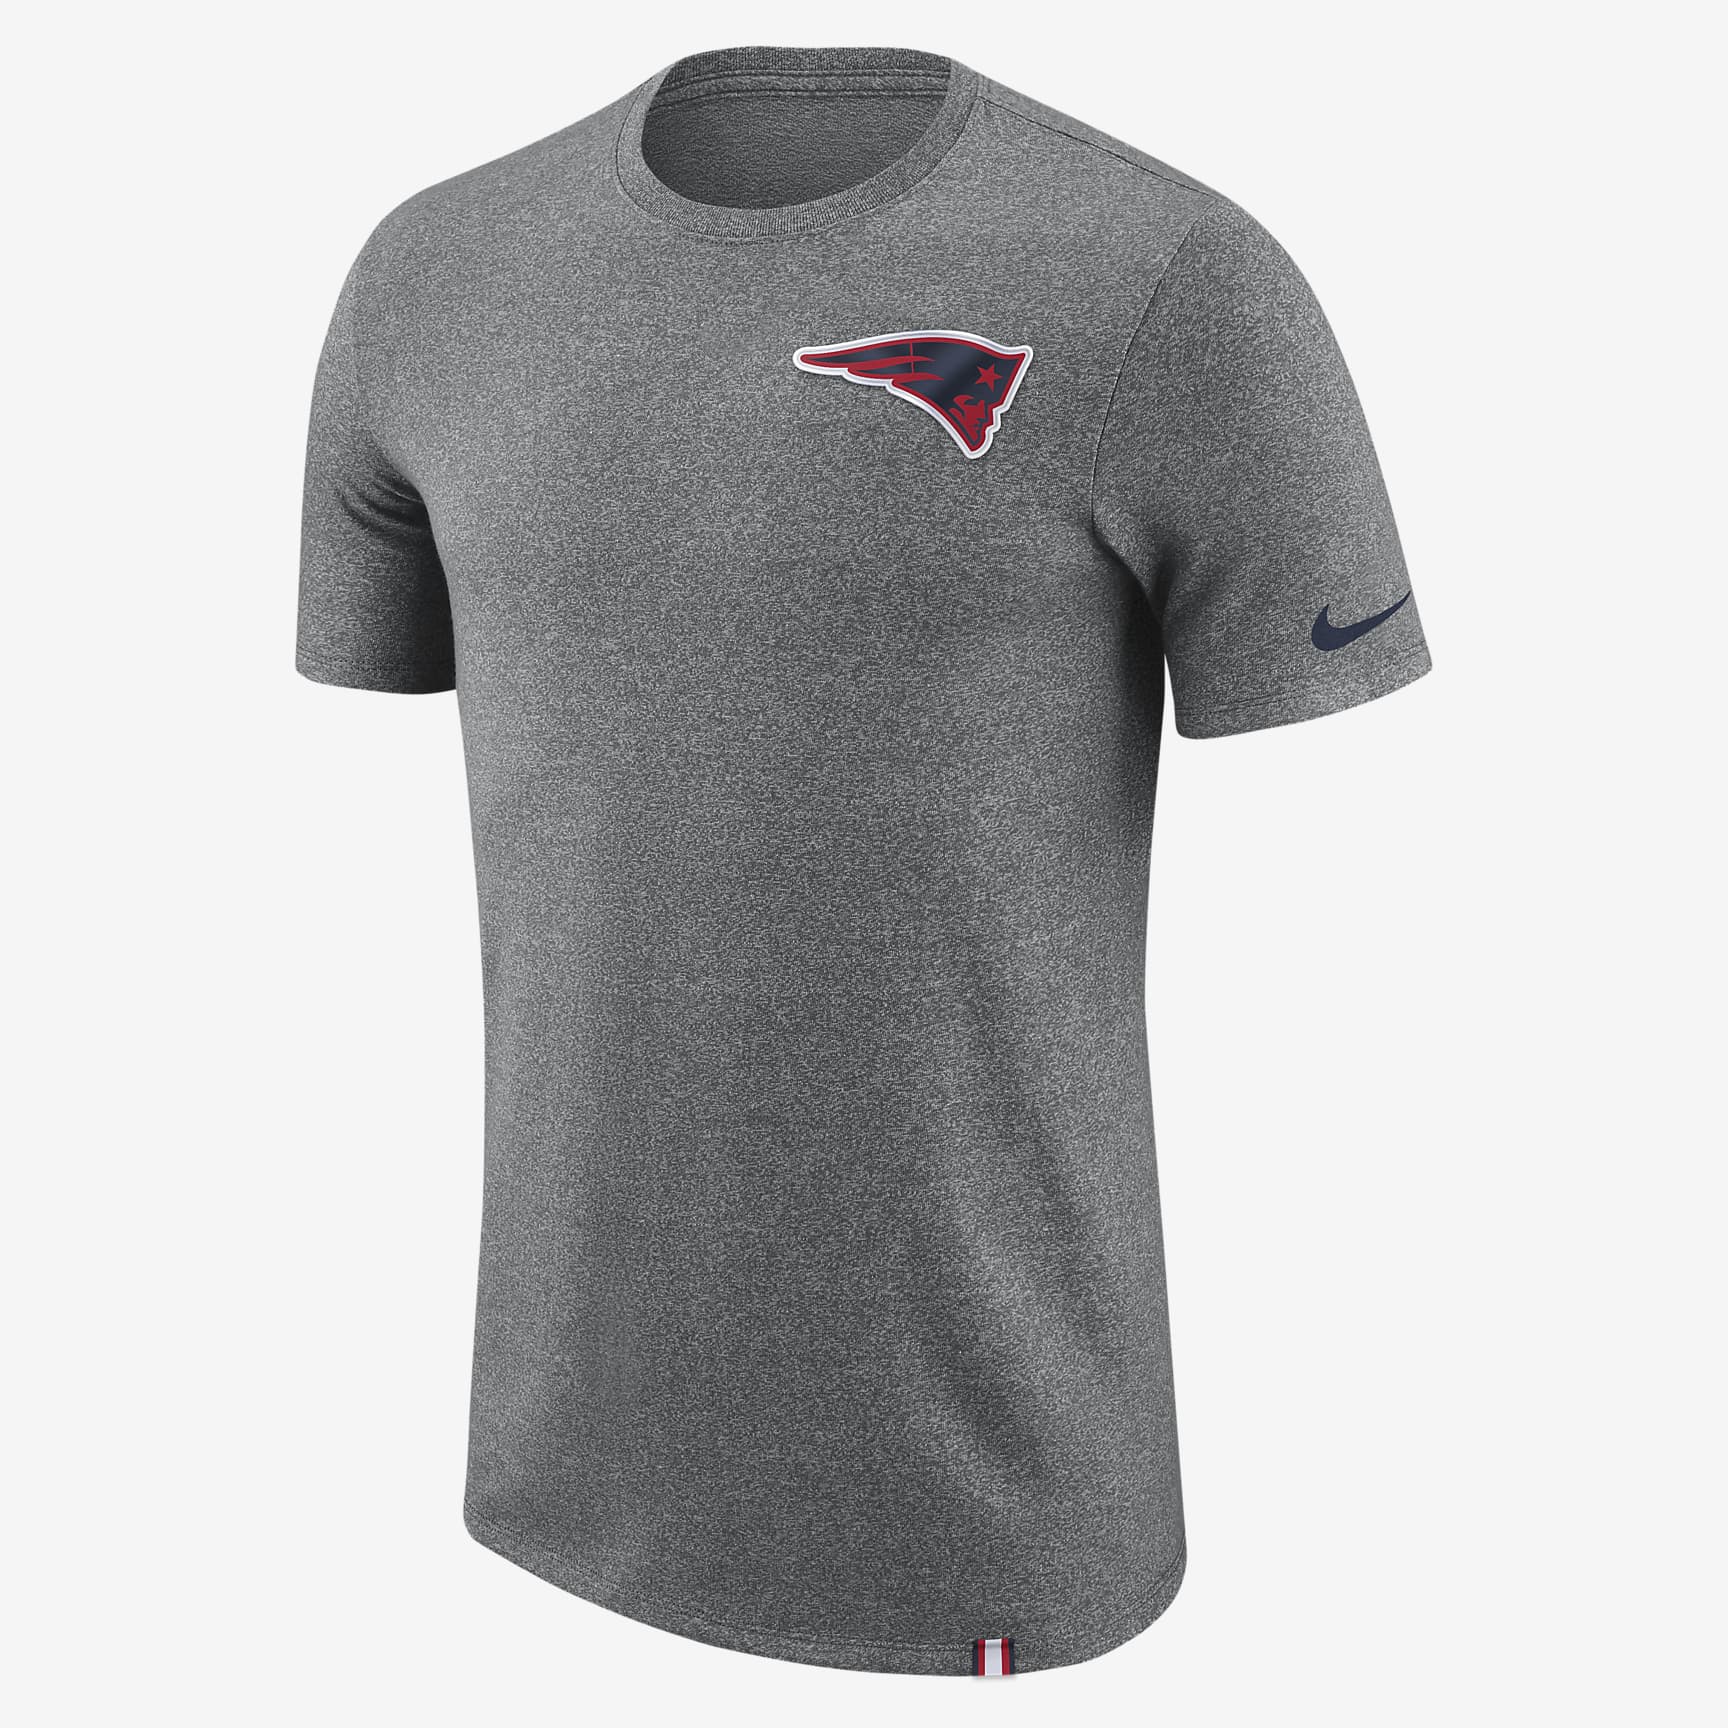 Nike Dry Marled Patch (NFL Patriots) Men's T-Shirt. Nike AU